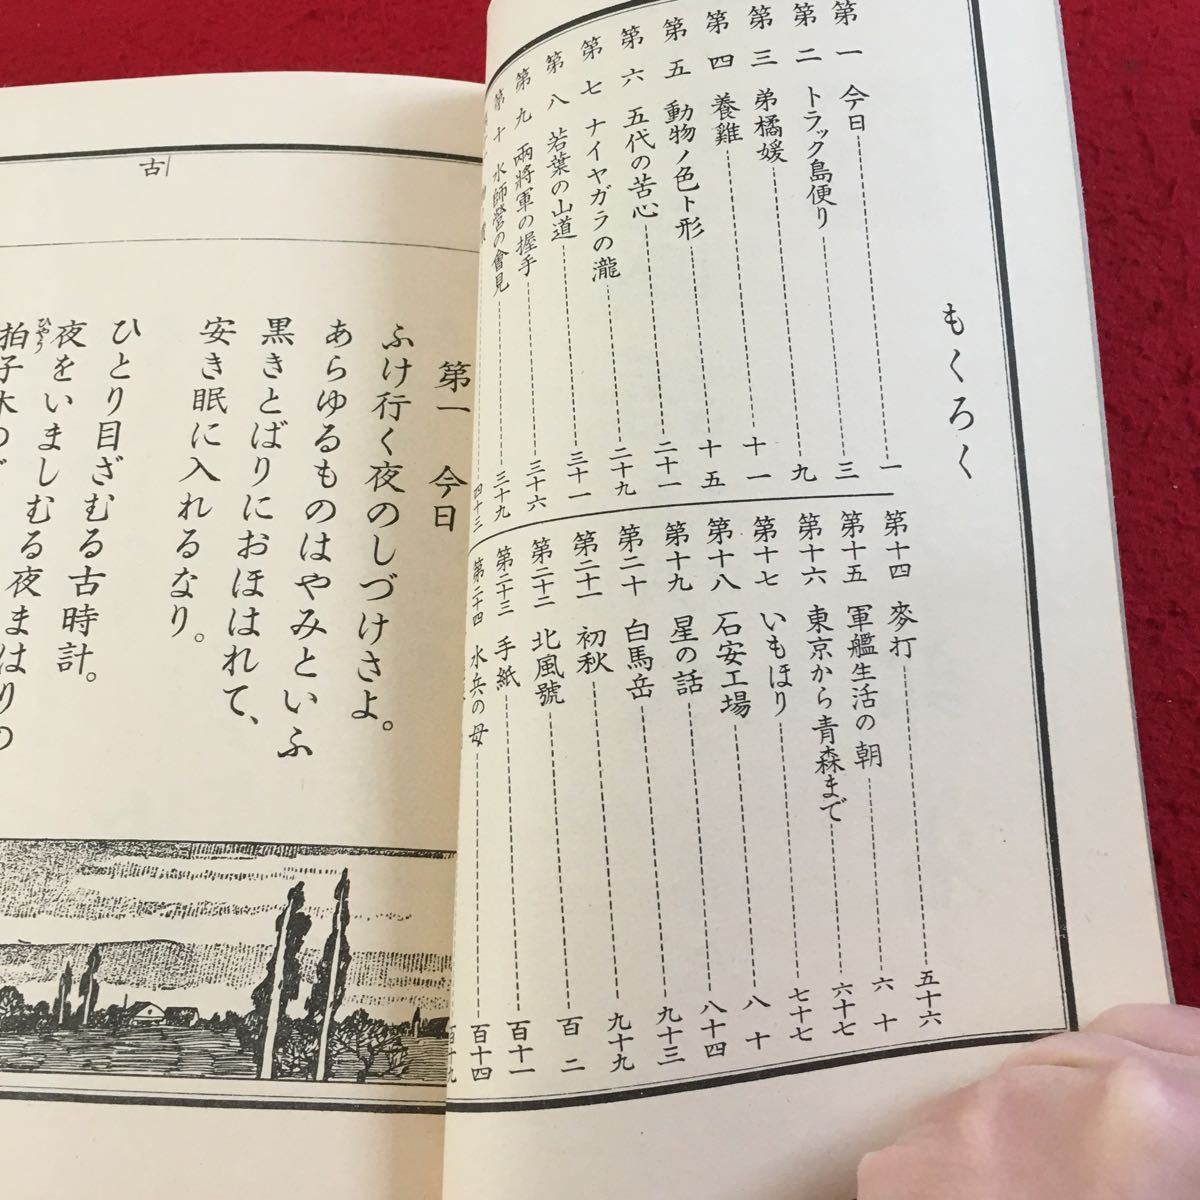 Y35-005.. elementary school national language reader volume 9 writing part . Showa era 10 year issue Osaka publication now day truck island flight .naiyagala. .. leaf. mountain road .... etc. 